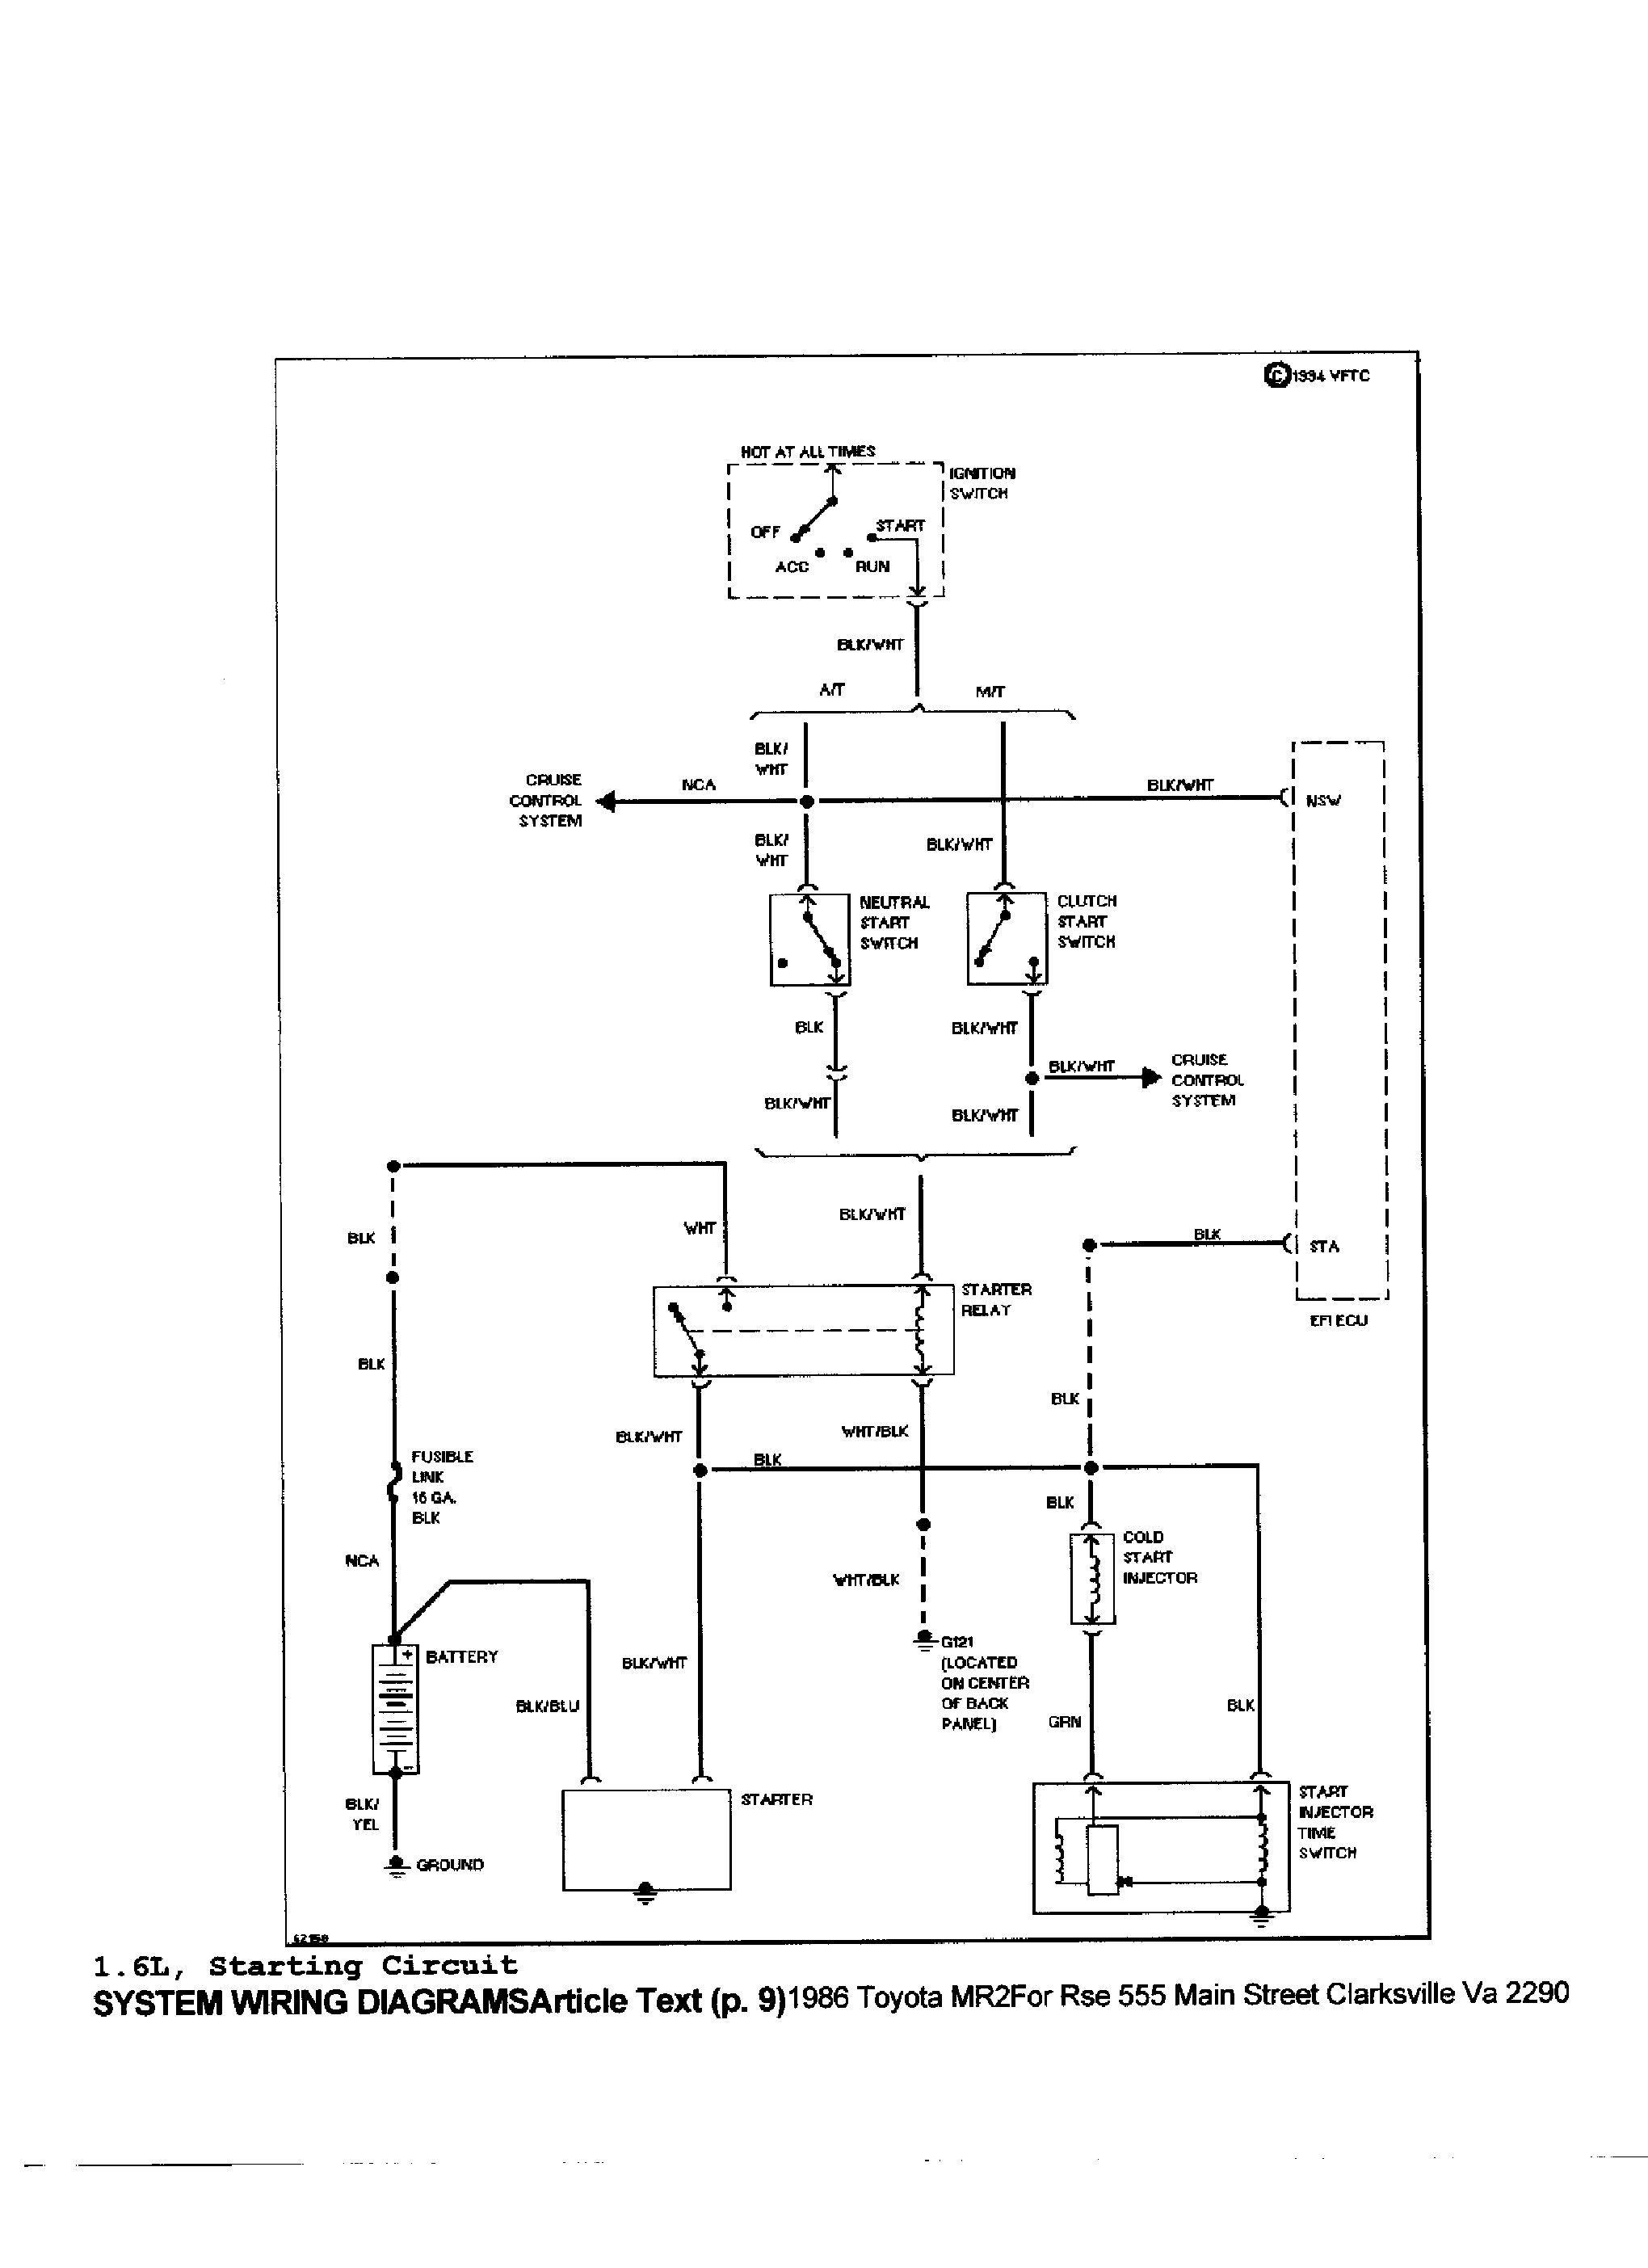 Hvac System Diagram Hvac System Diagram 1991 Toyota Mr2 Wiring Diagrams Interval